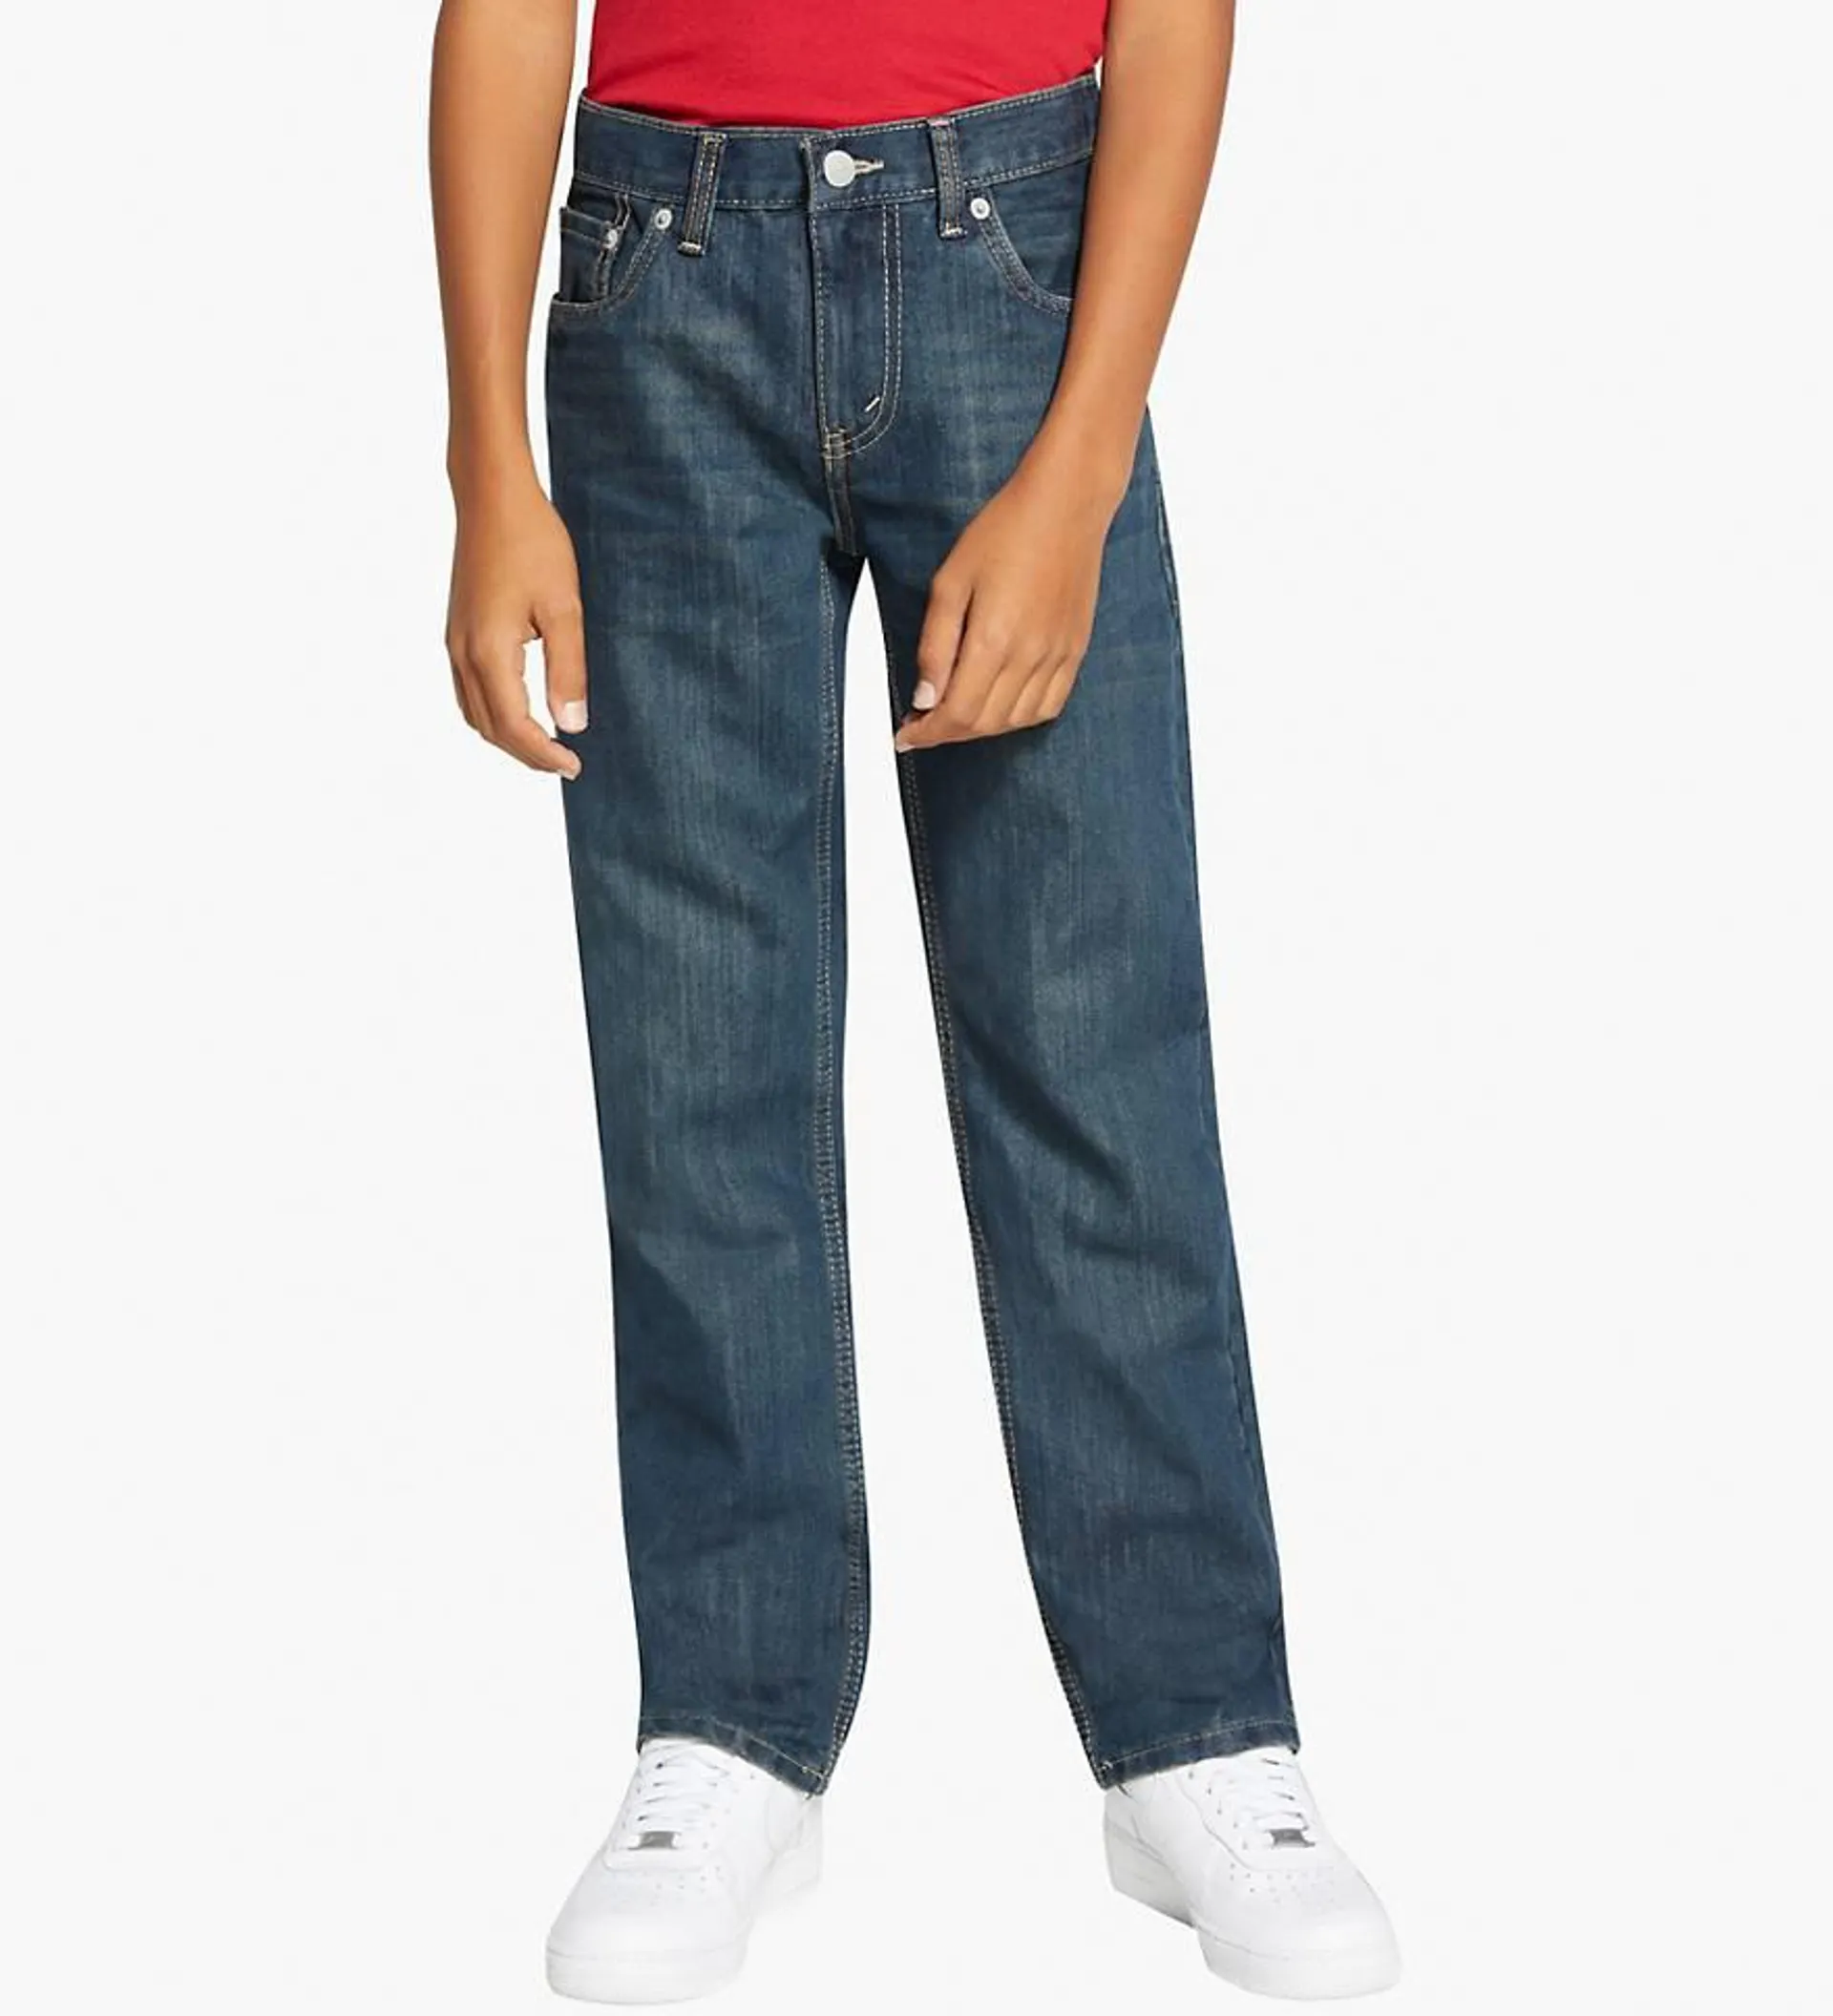 505™ Regular Fit Big Boys Jeans 8-20